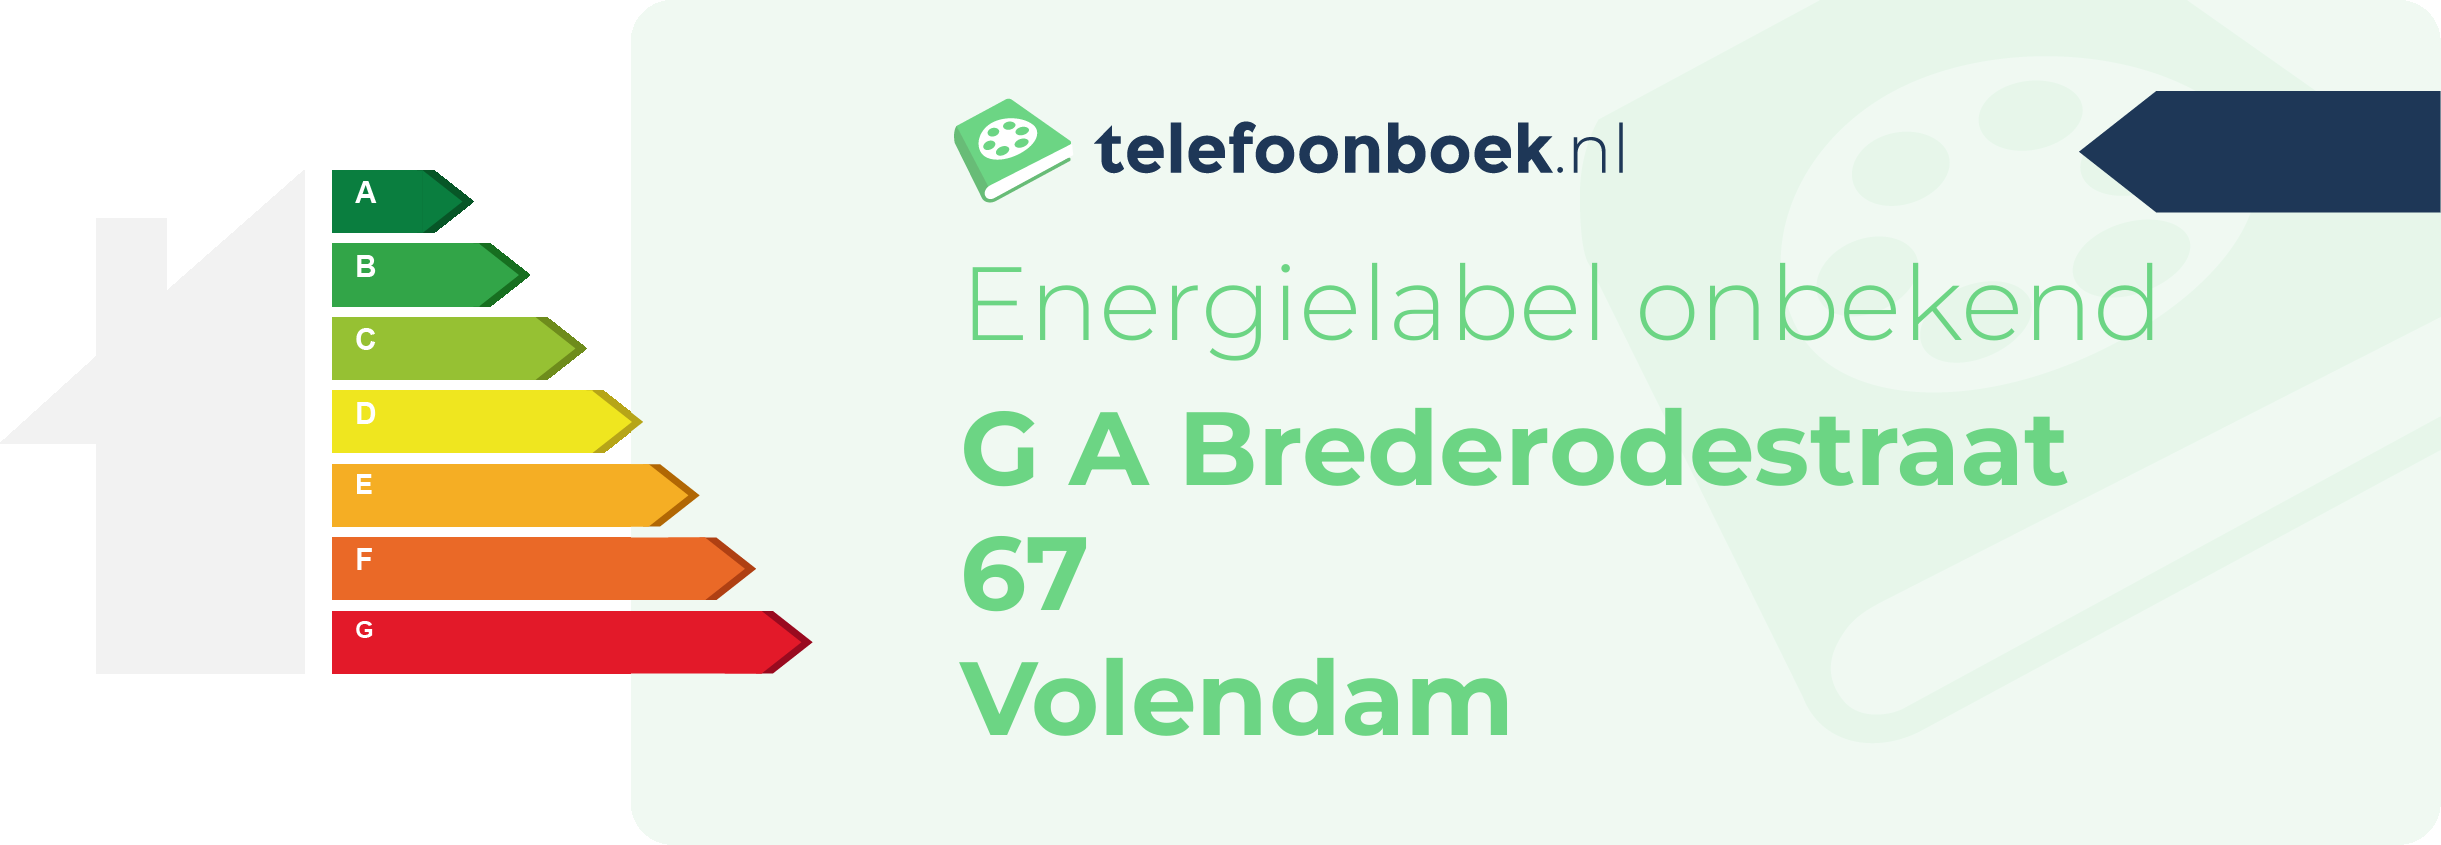 Energielabel G A Brederodestraat 67 Volendam